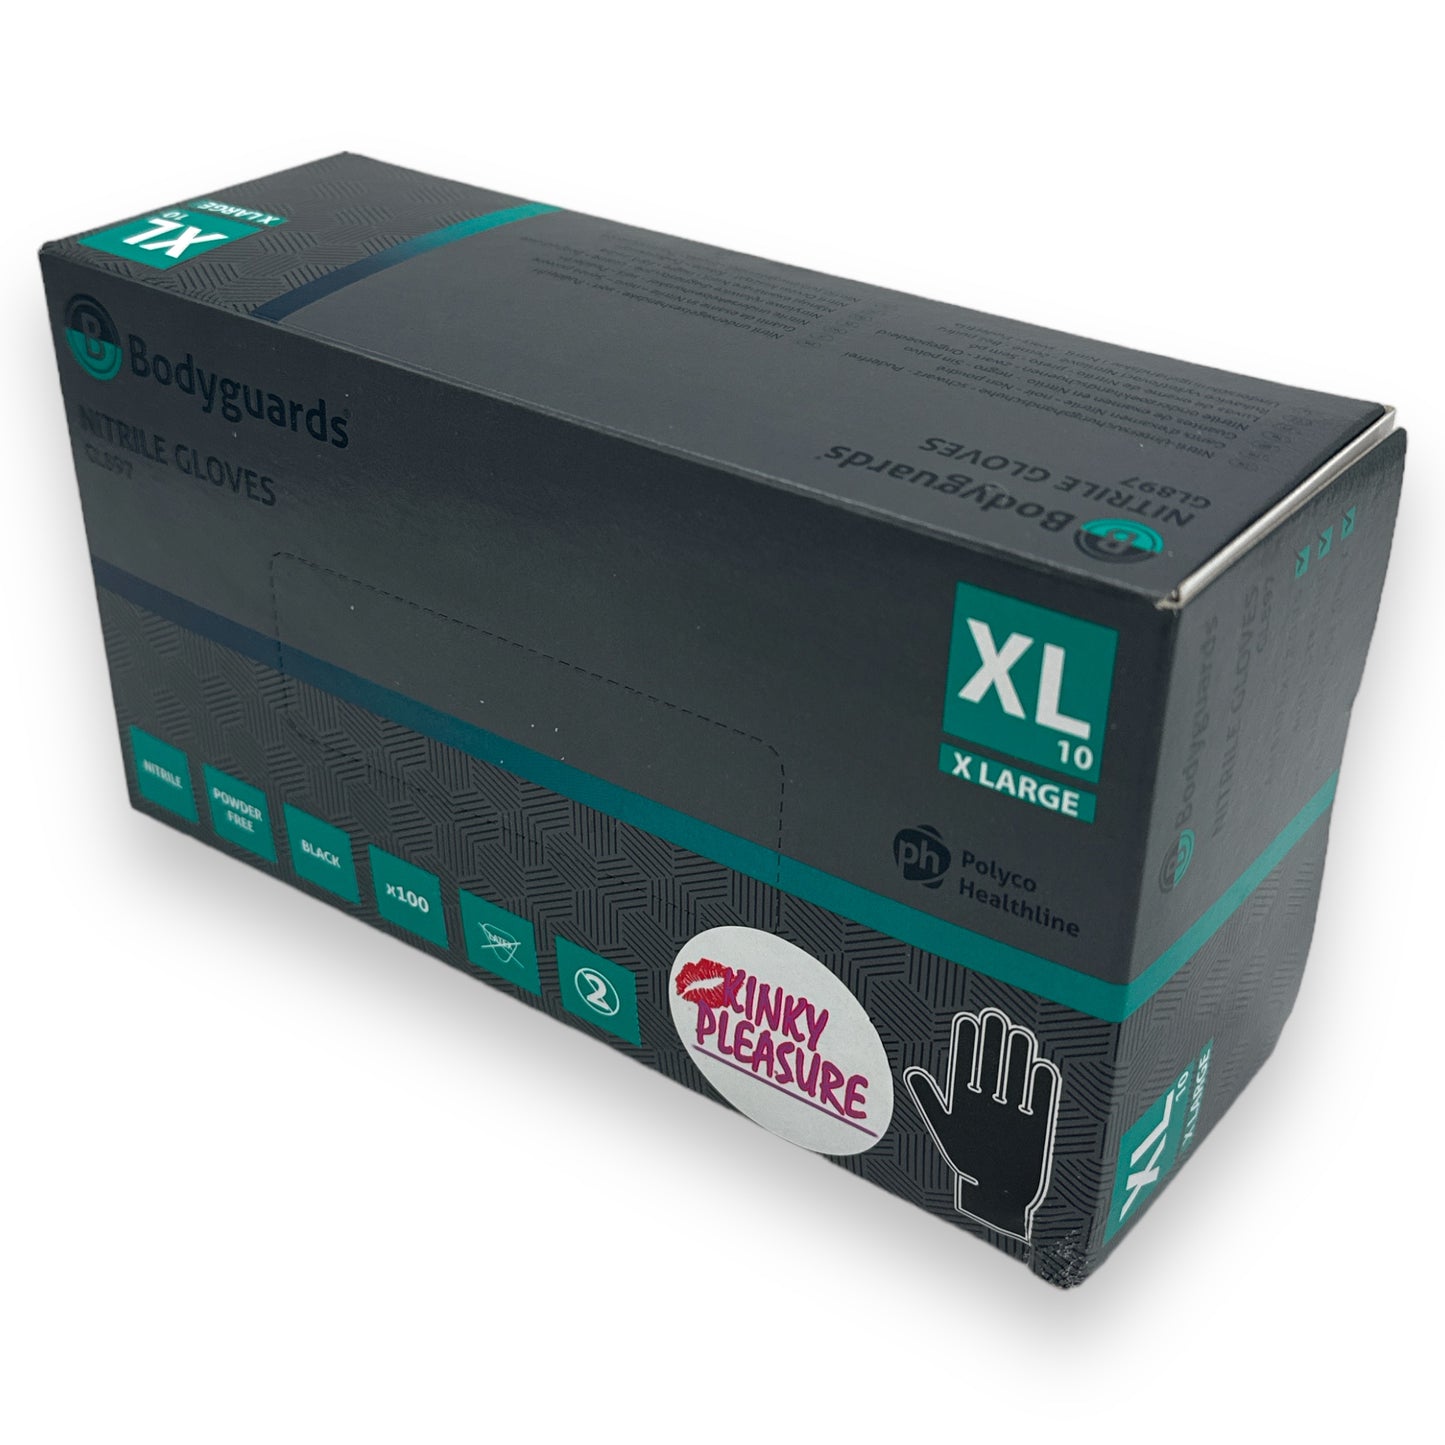 Kinky Pleasure - PK001 - Nitrile Handgloves Box - Black - 3 Size's - 100 Pieces